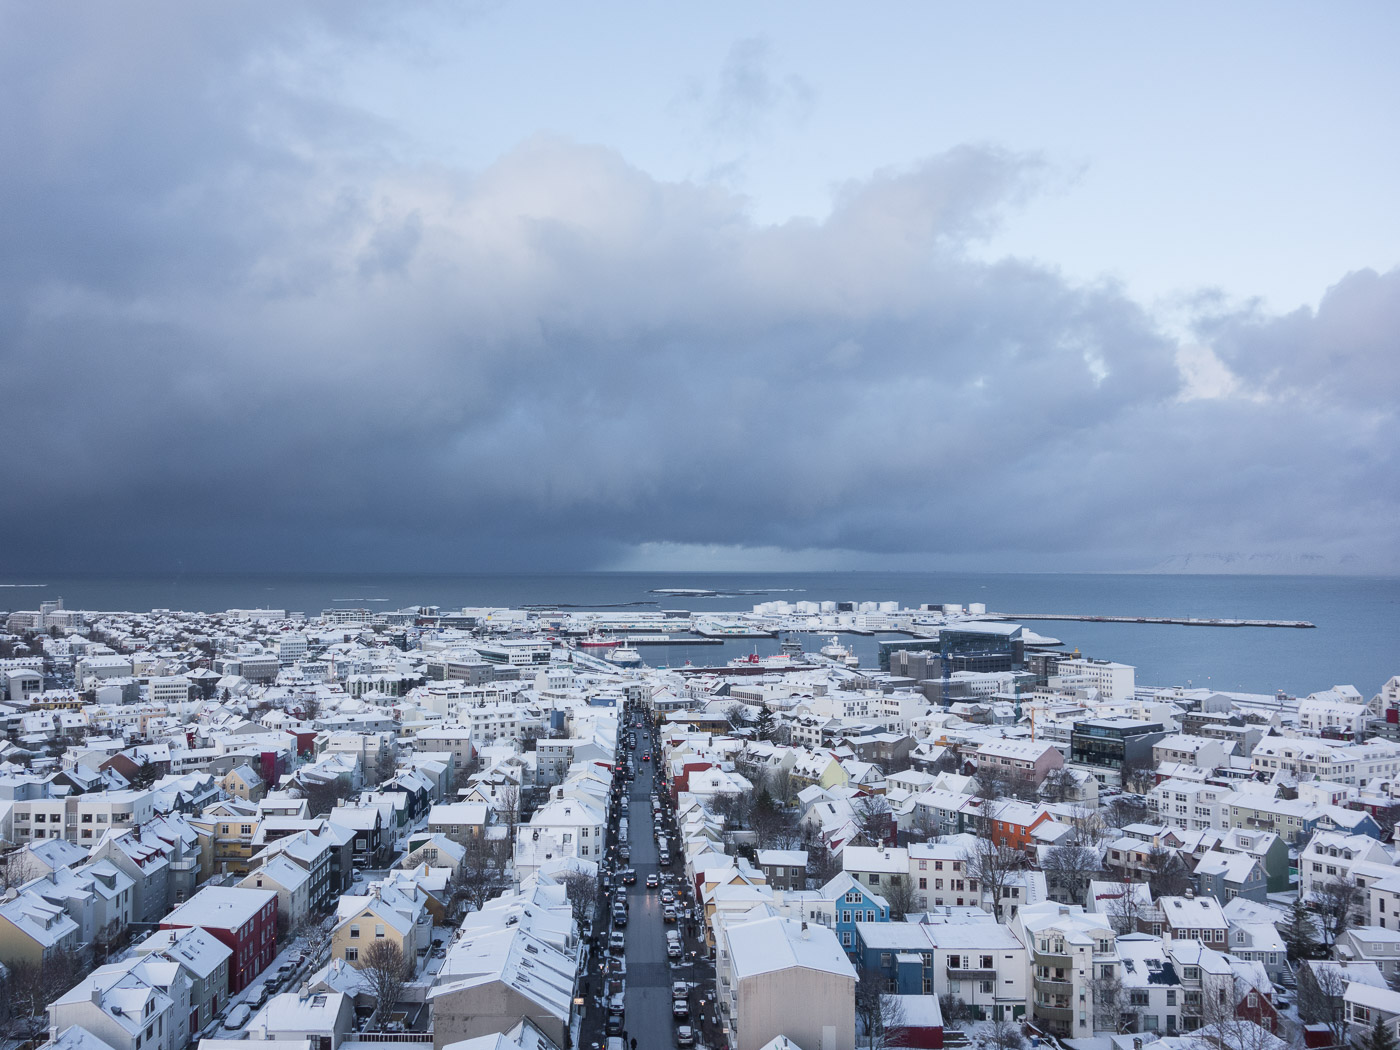 Reykjavík. Three times view from Hallgrímskirkja. - Reykjavík from above. I. (3 January 2015)